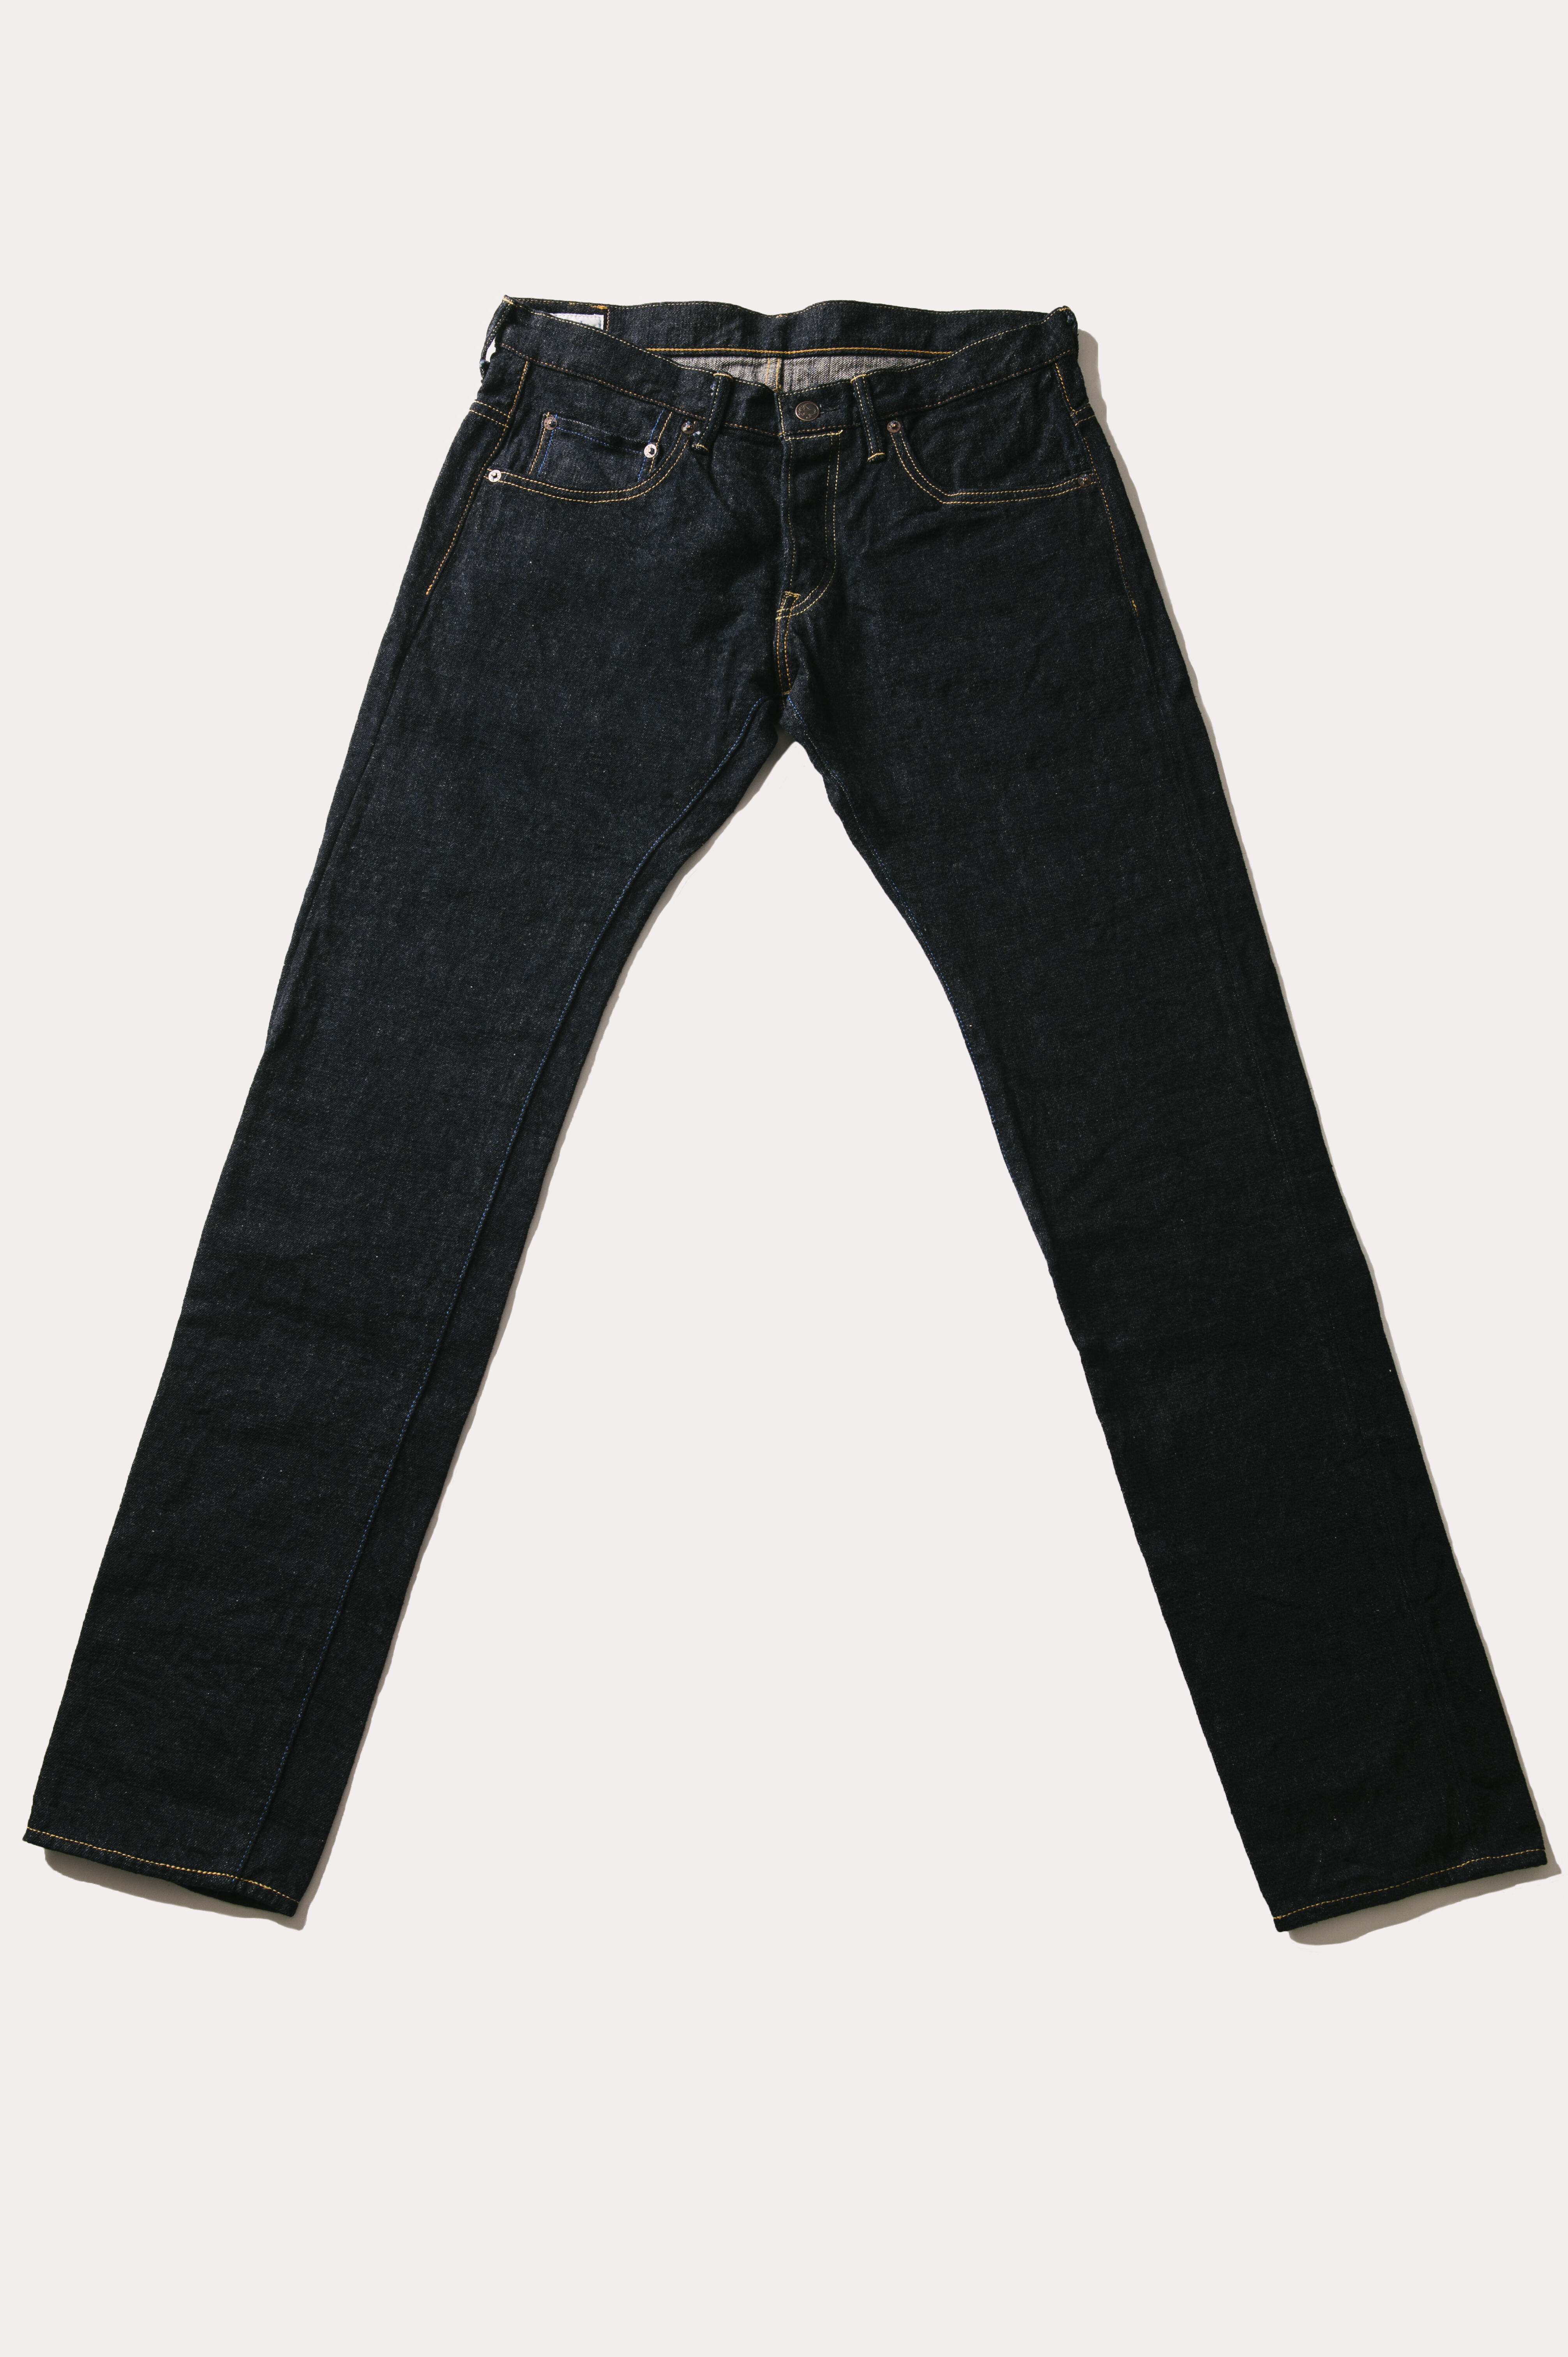 Buy Tokyo 404 Men's Ripped Jeans 00 Ldw | online store of Turkish goods TT -Turk